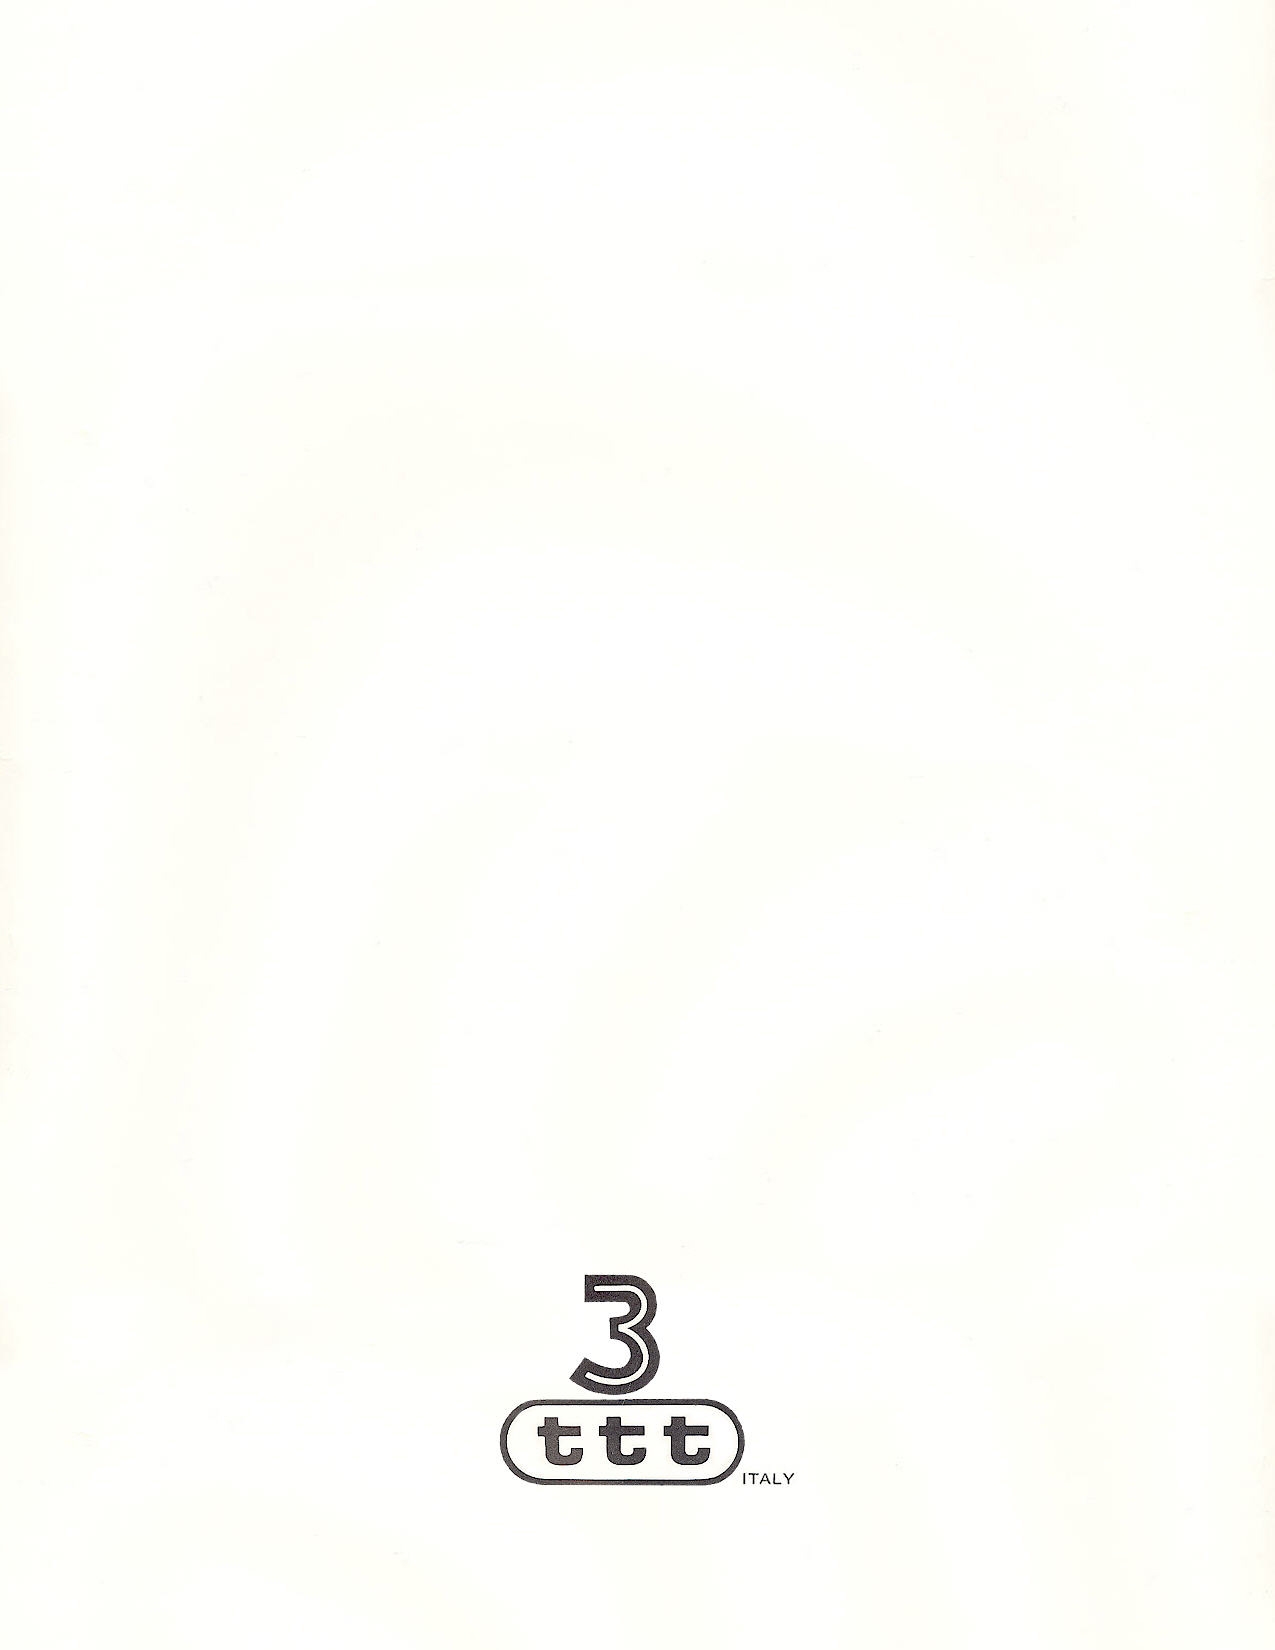 3ttt catalog (10-1974)